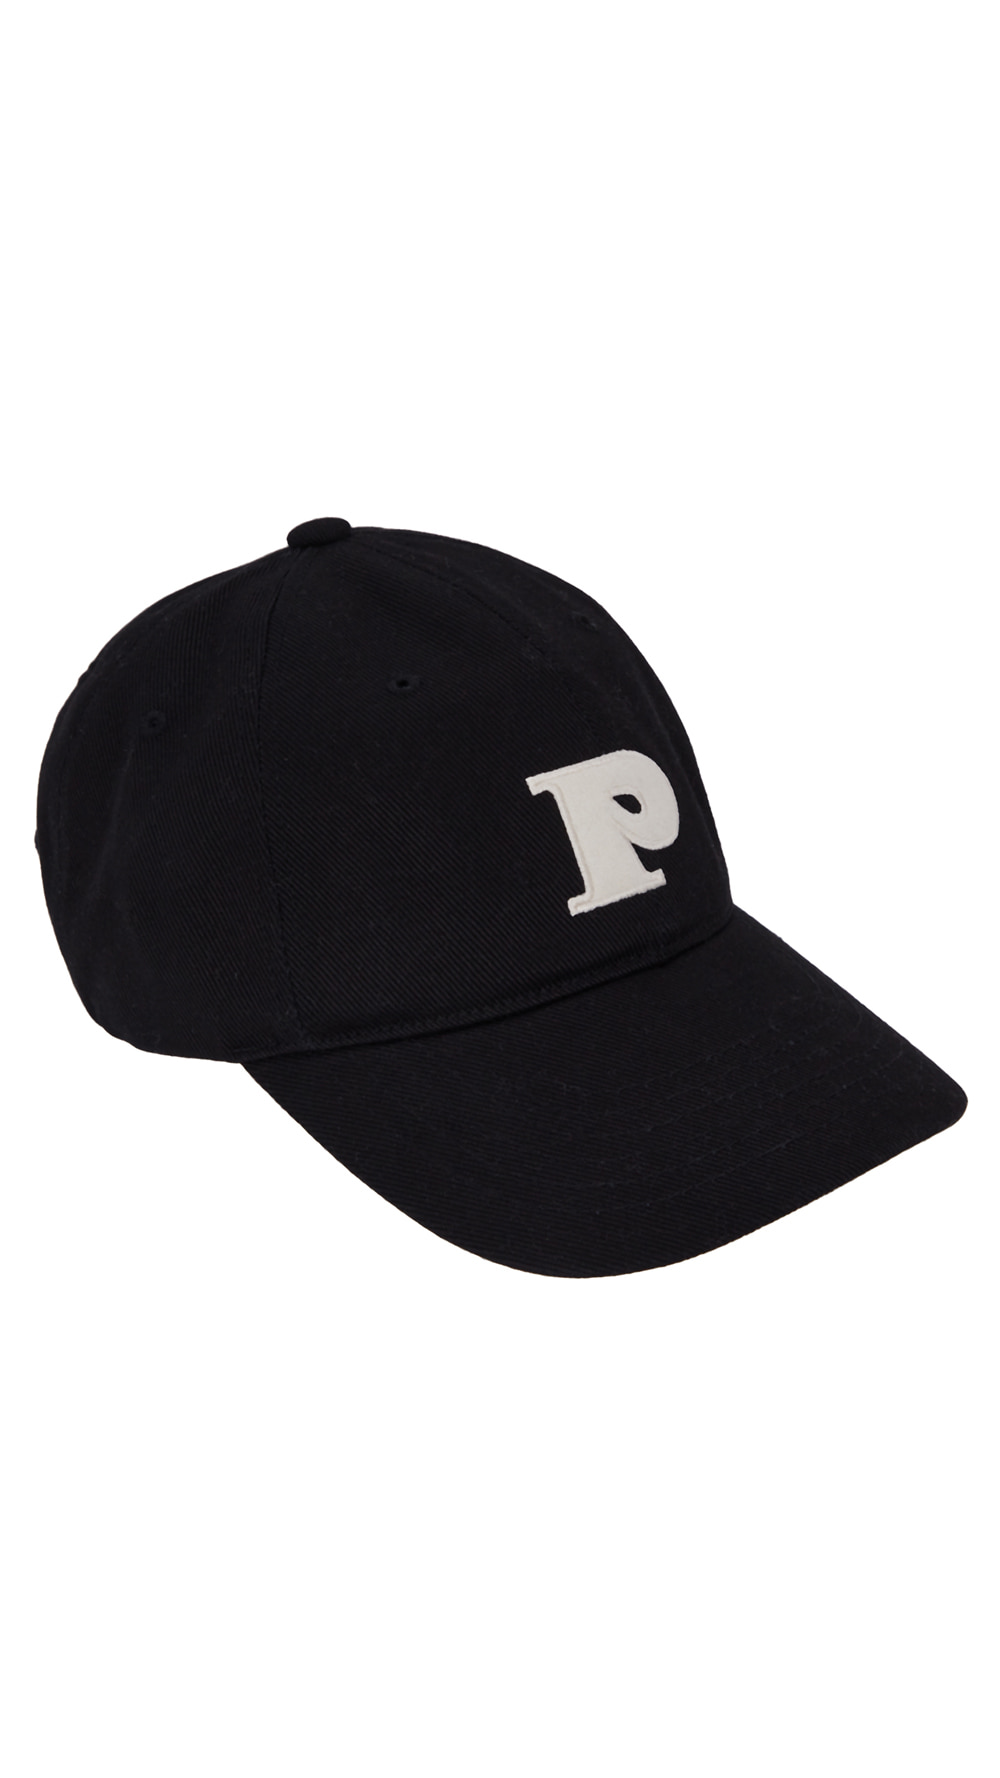 P LOGO BALL CAP - Black